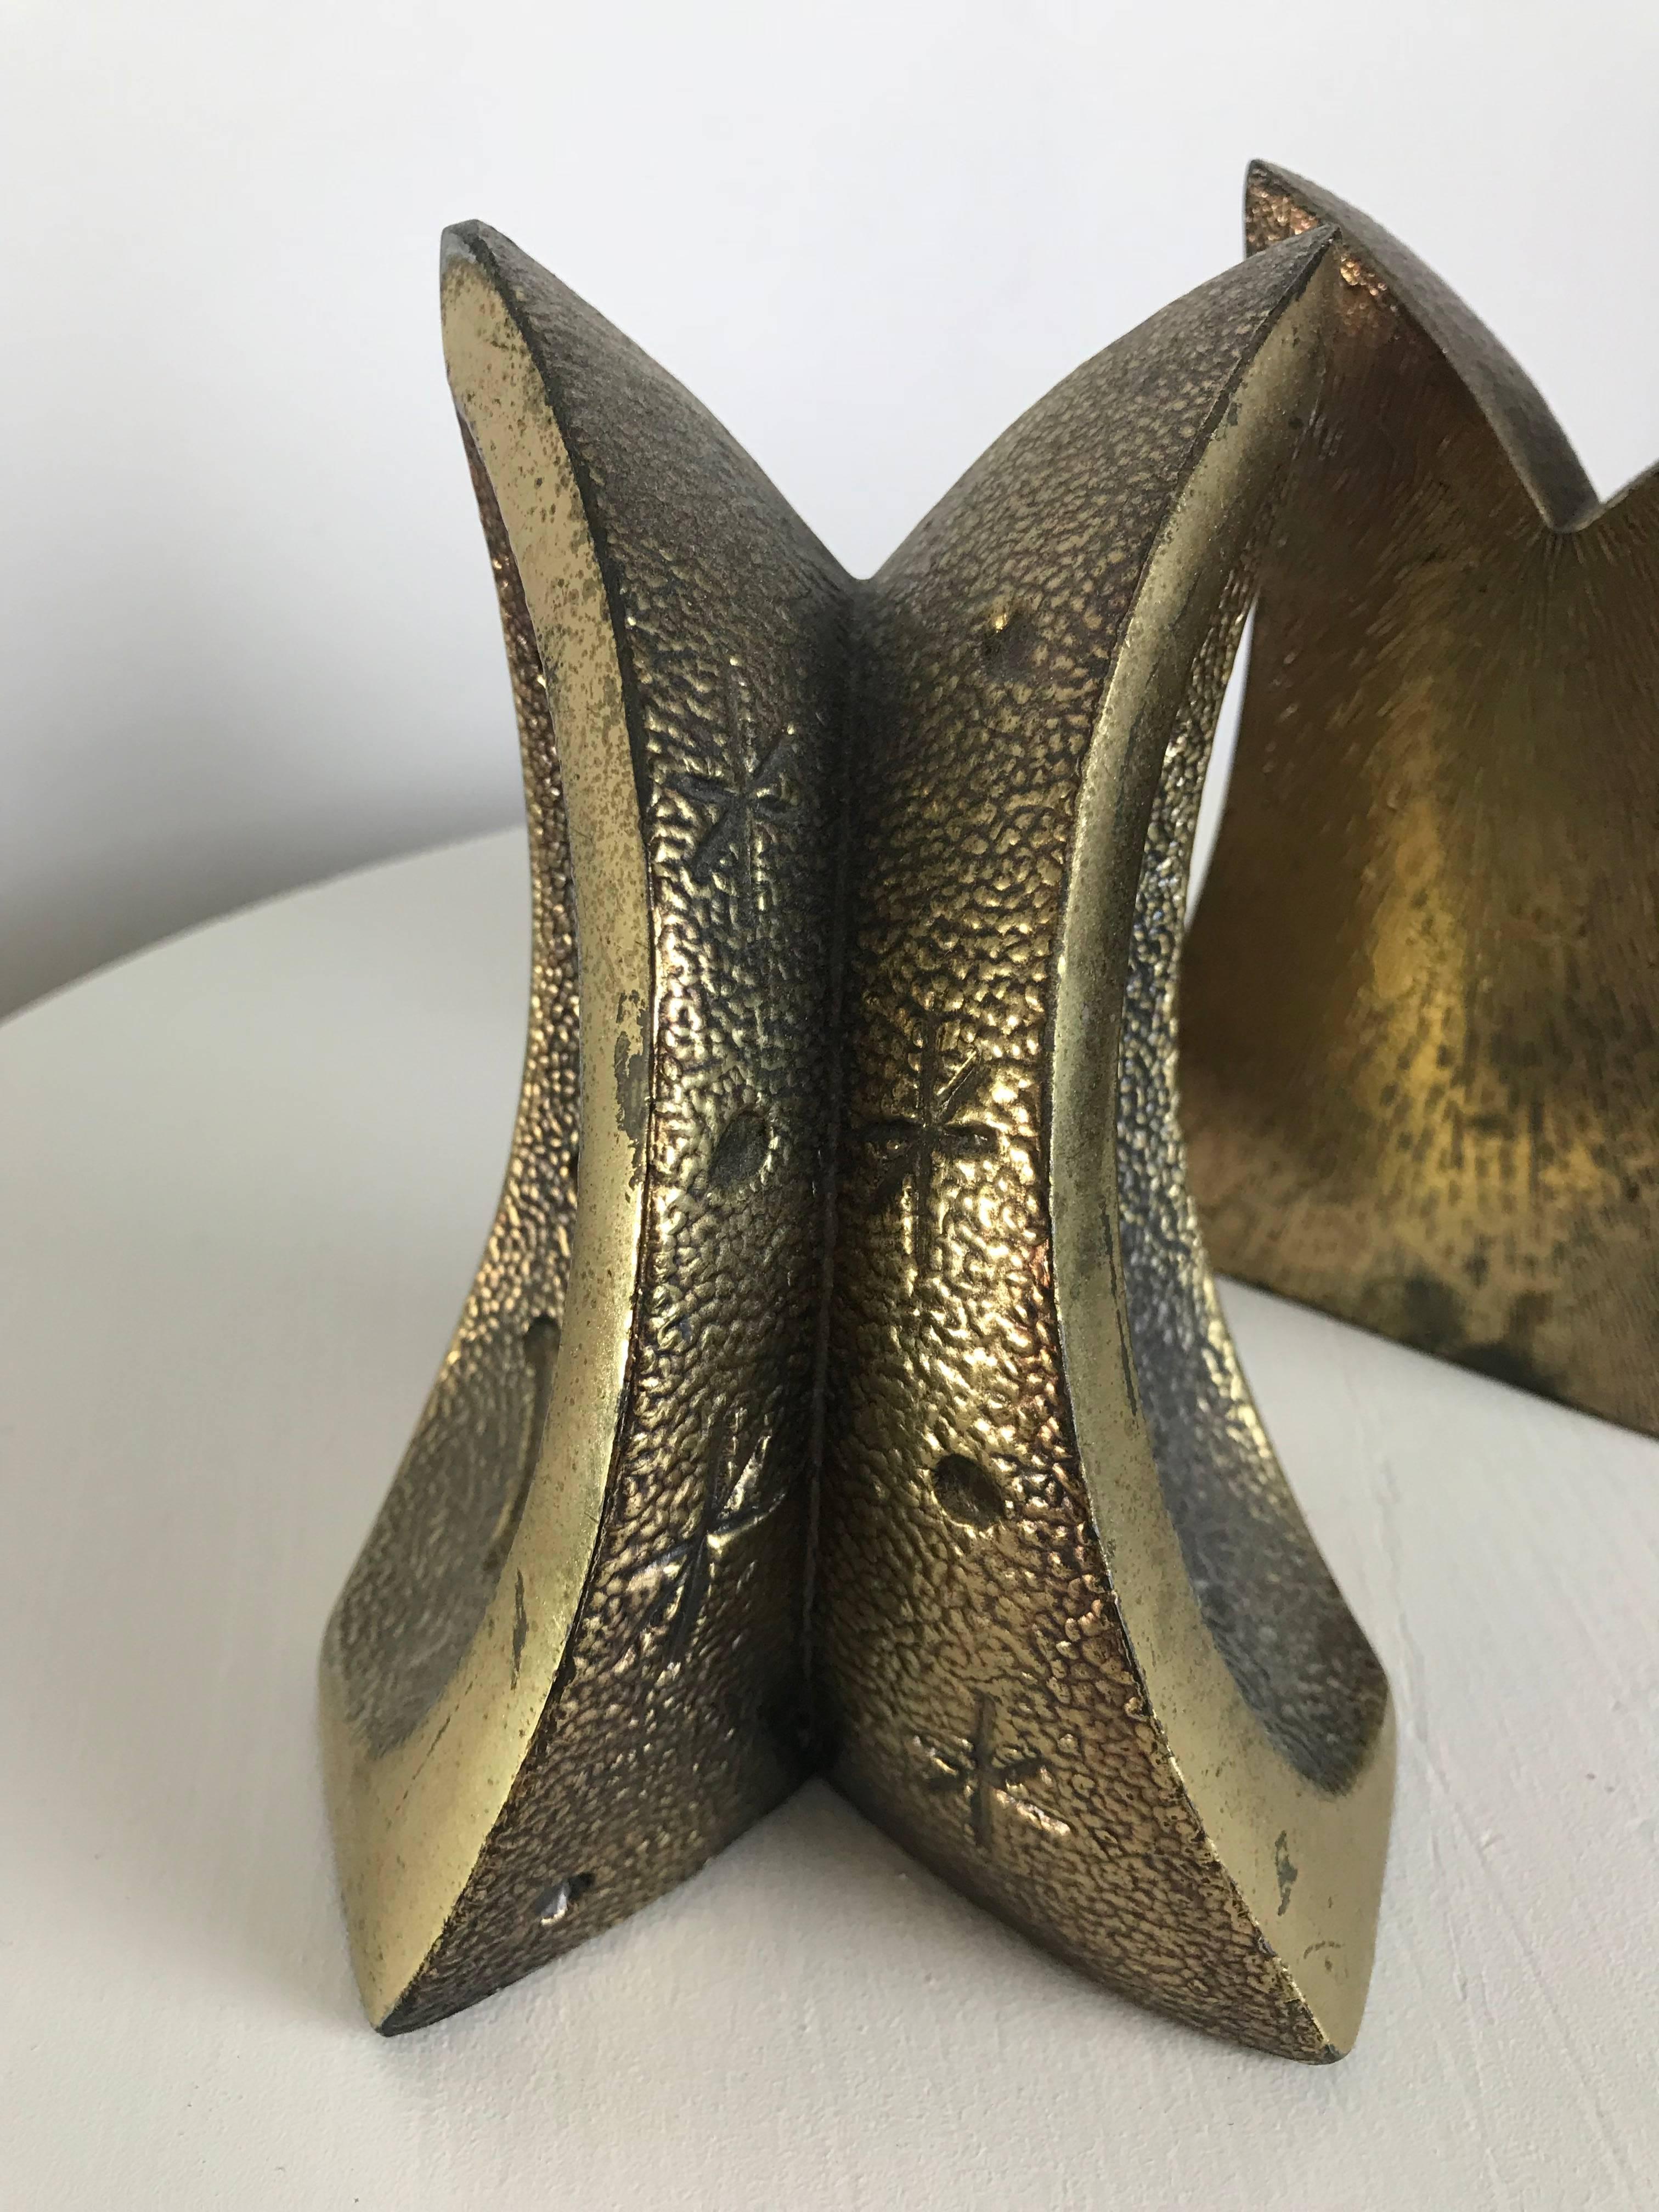 Metal Modernist Brass Sculptural Bookends by Ben Seibel for Jenfredware, Raymor, Pair